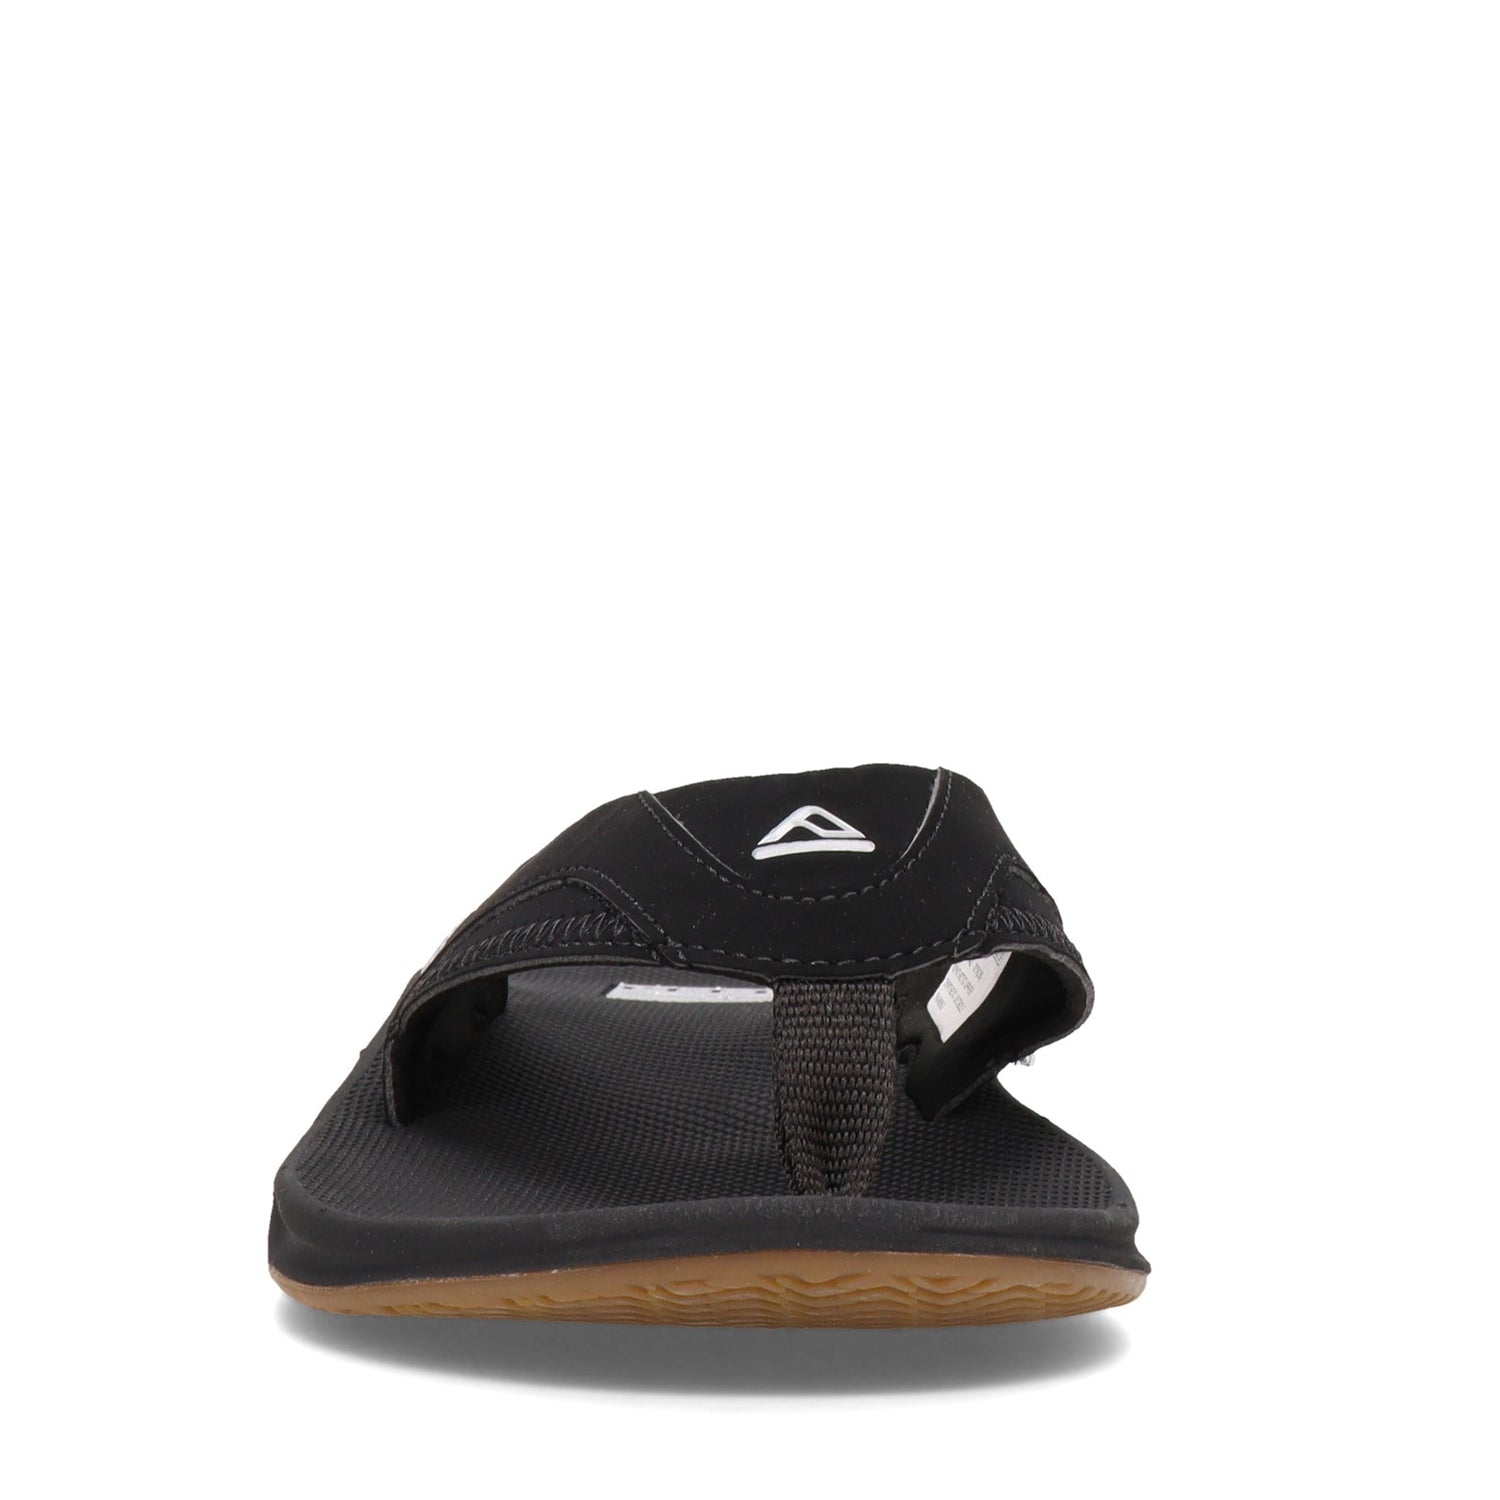 Peltz Shoes  Men's Reef Fanning Flip-Flop Black/Silver RF-002026 BLS